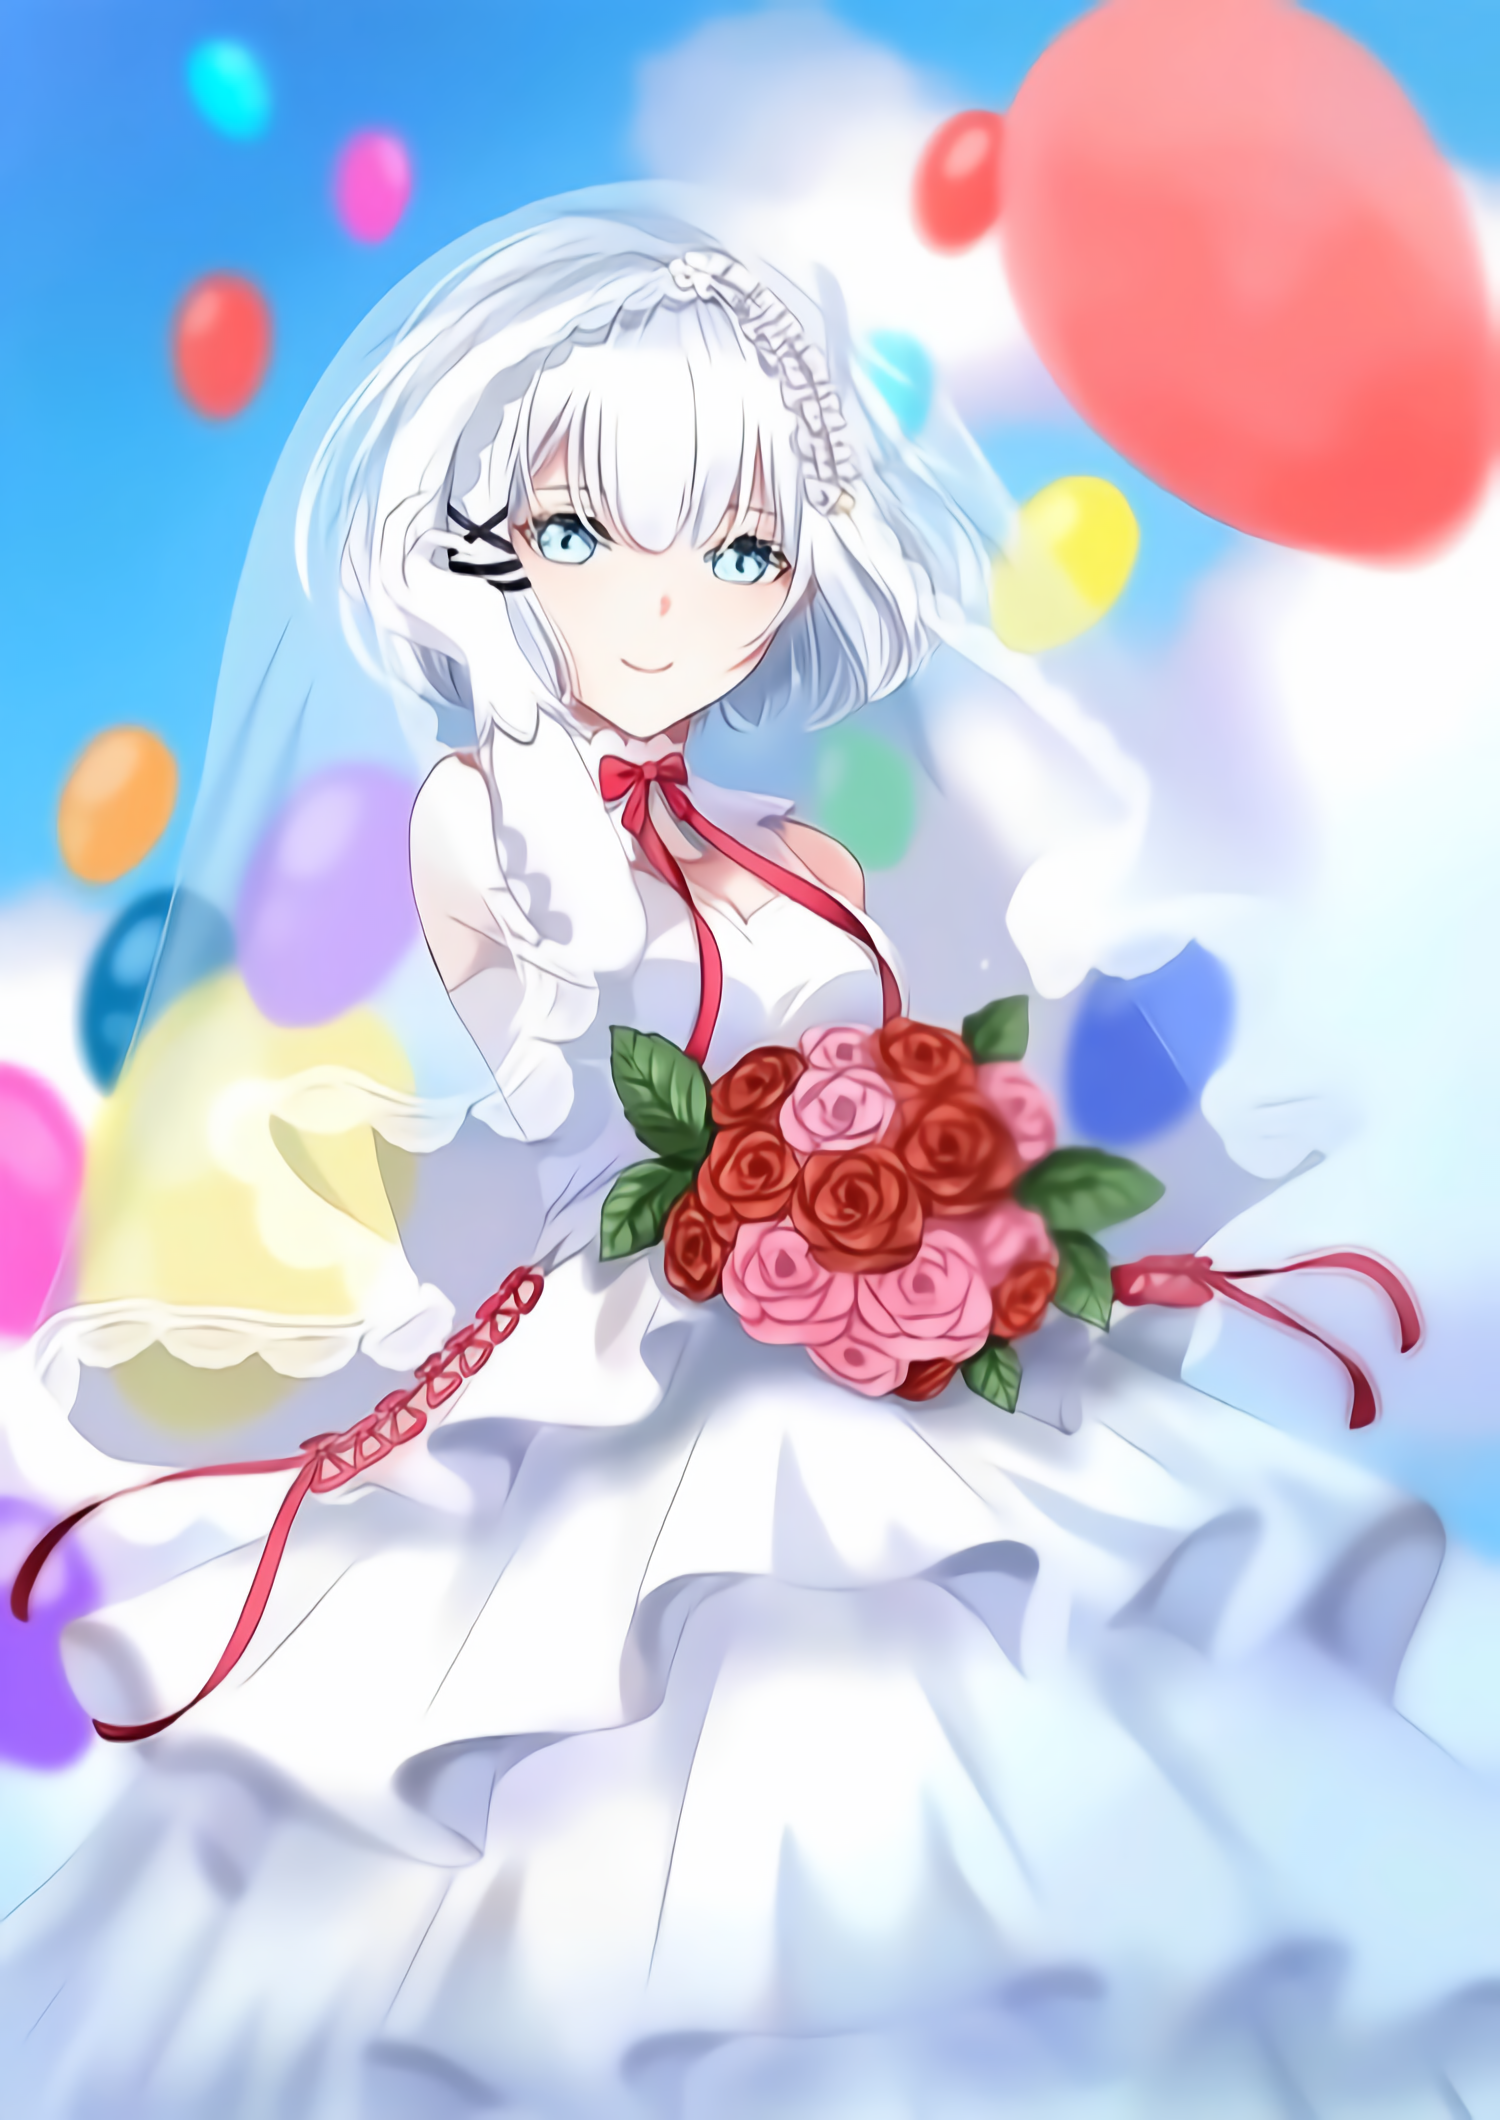 Anime 1500x2120 white hair Siesta short hair blue eyes Tantei Wa Mou Shindeiru wedding dress balloon holding flowers looking at viewer anime anime girls dress flowers